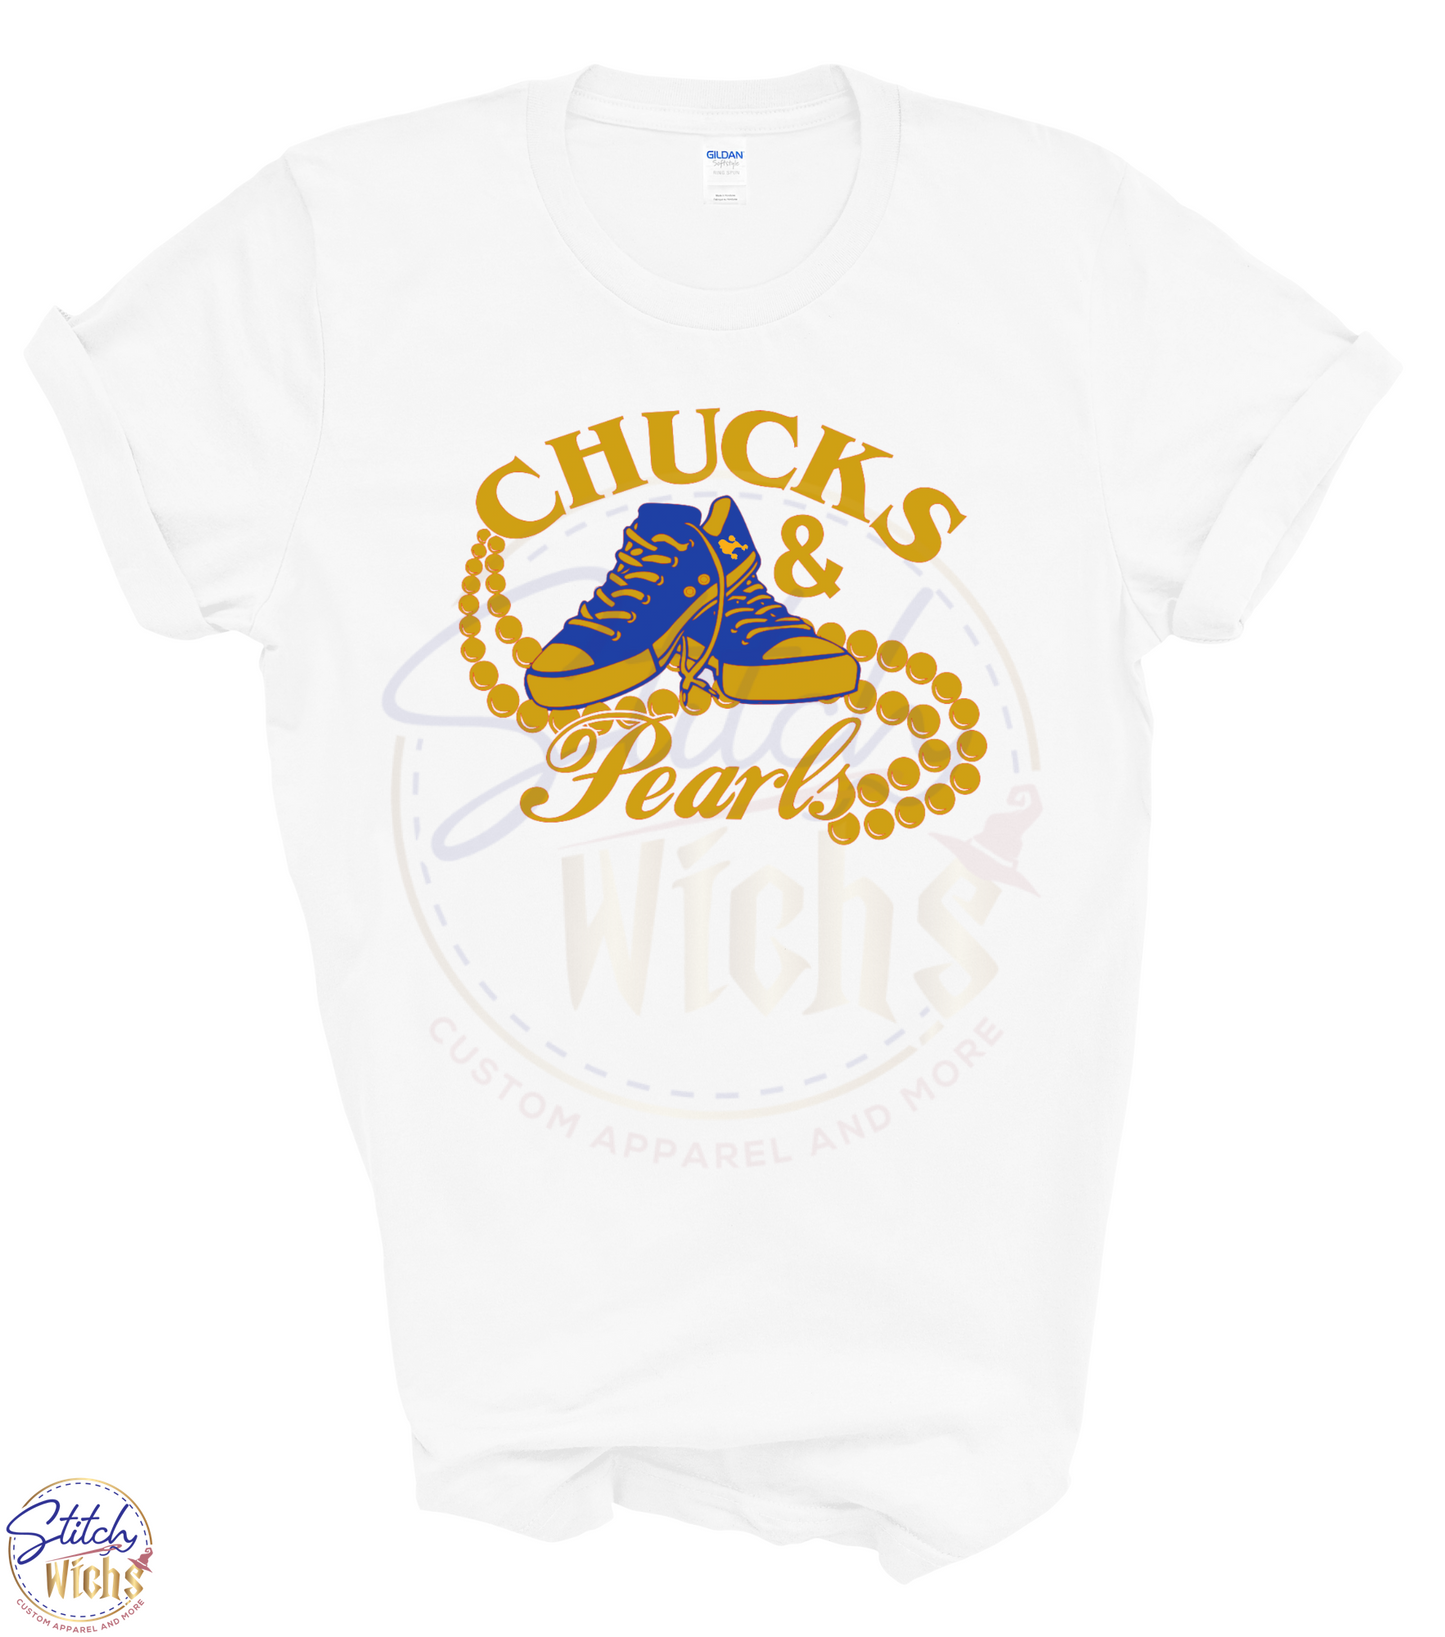 Chucks & Pearls - Royal Blue & Gold